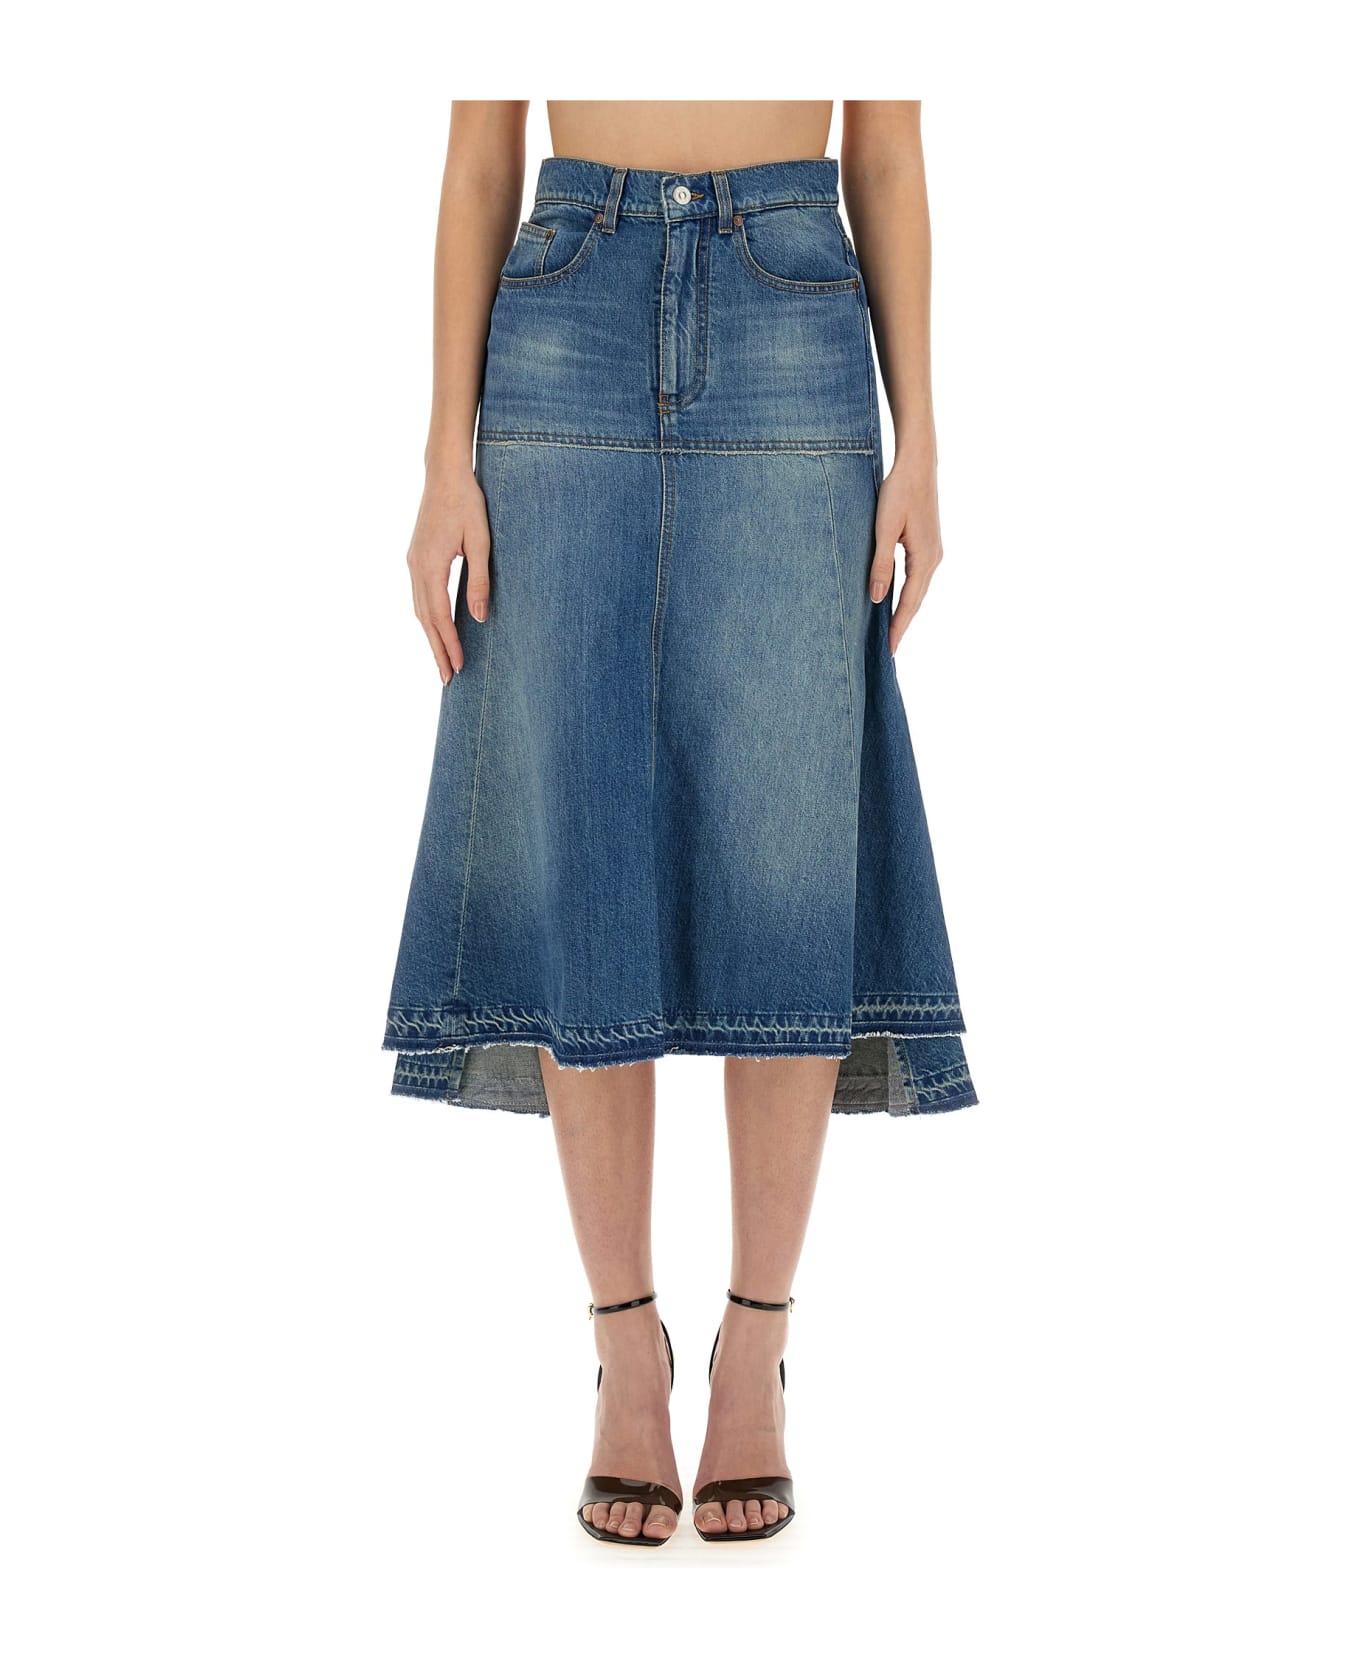 Victoria Beckham Denim Skirt - BLU